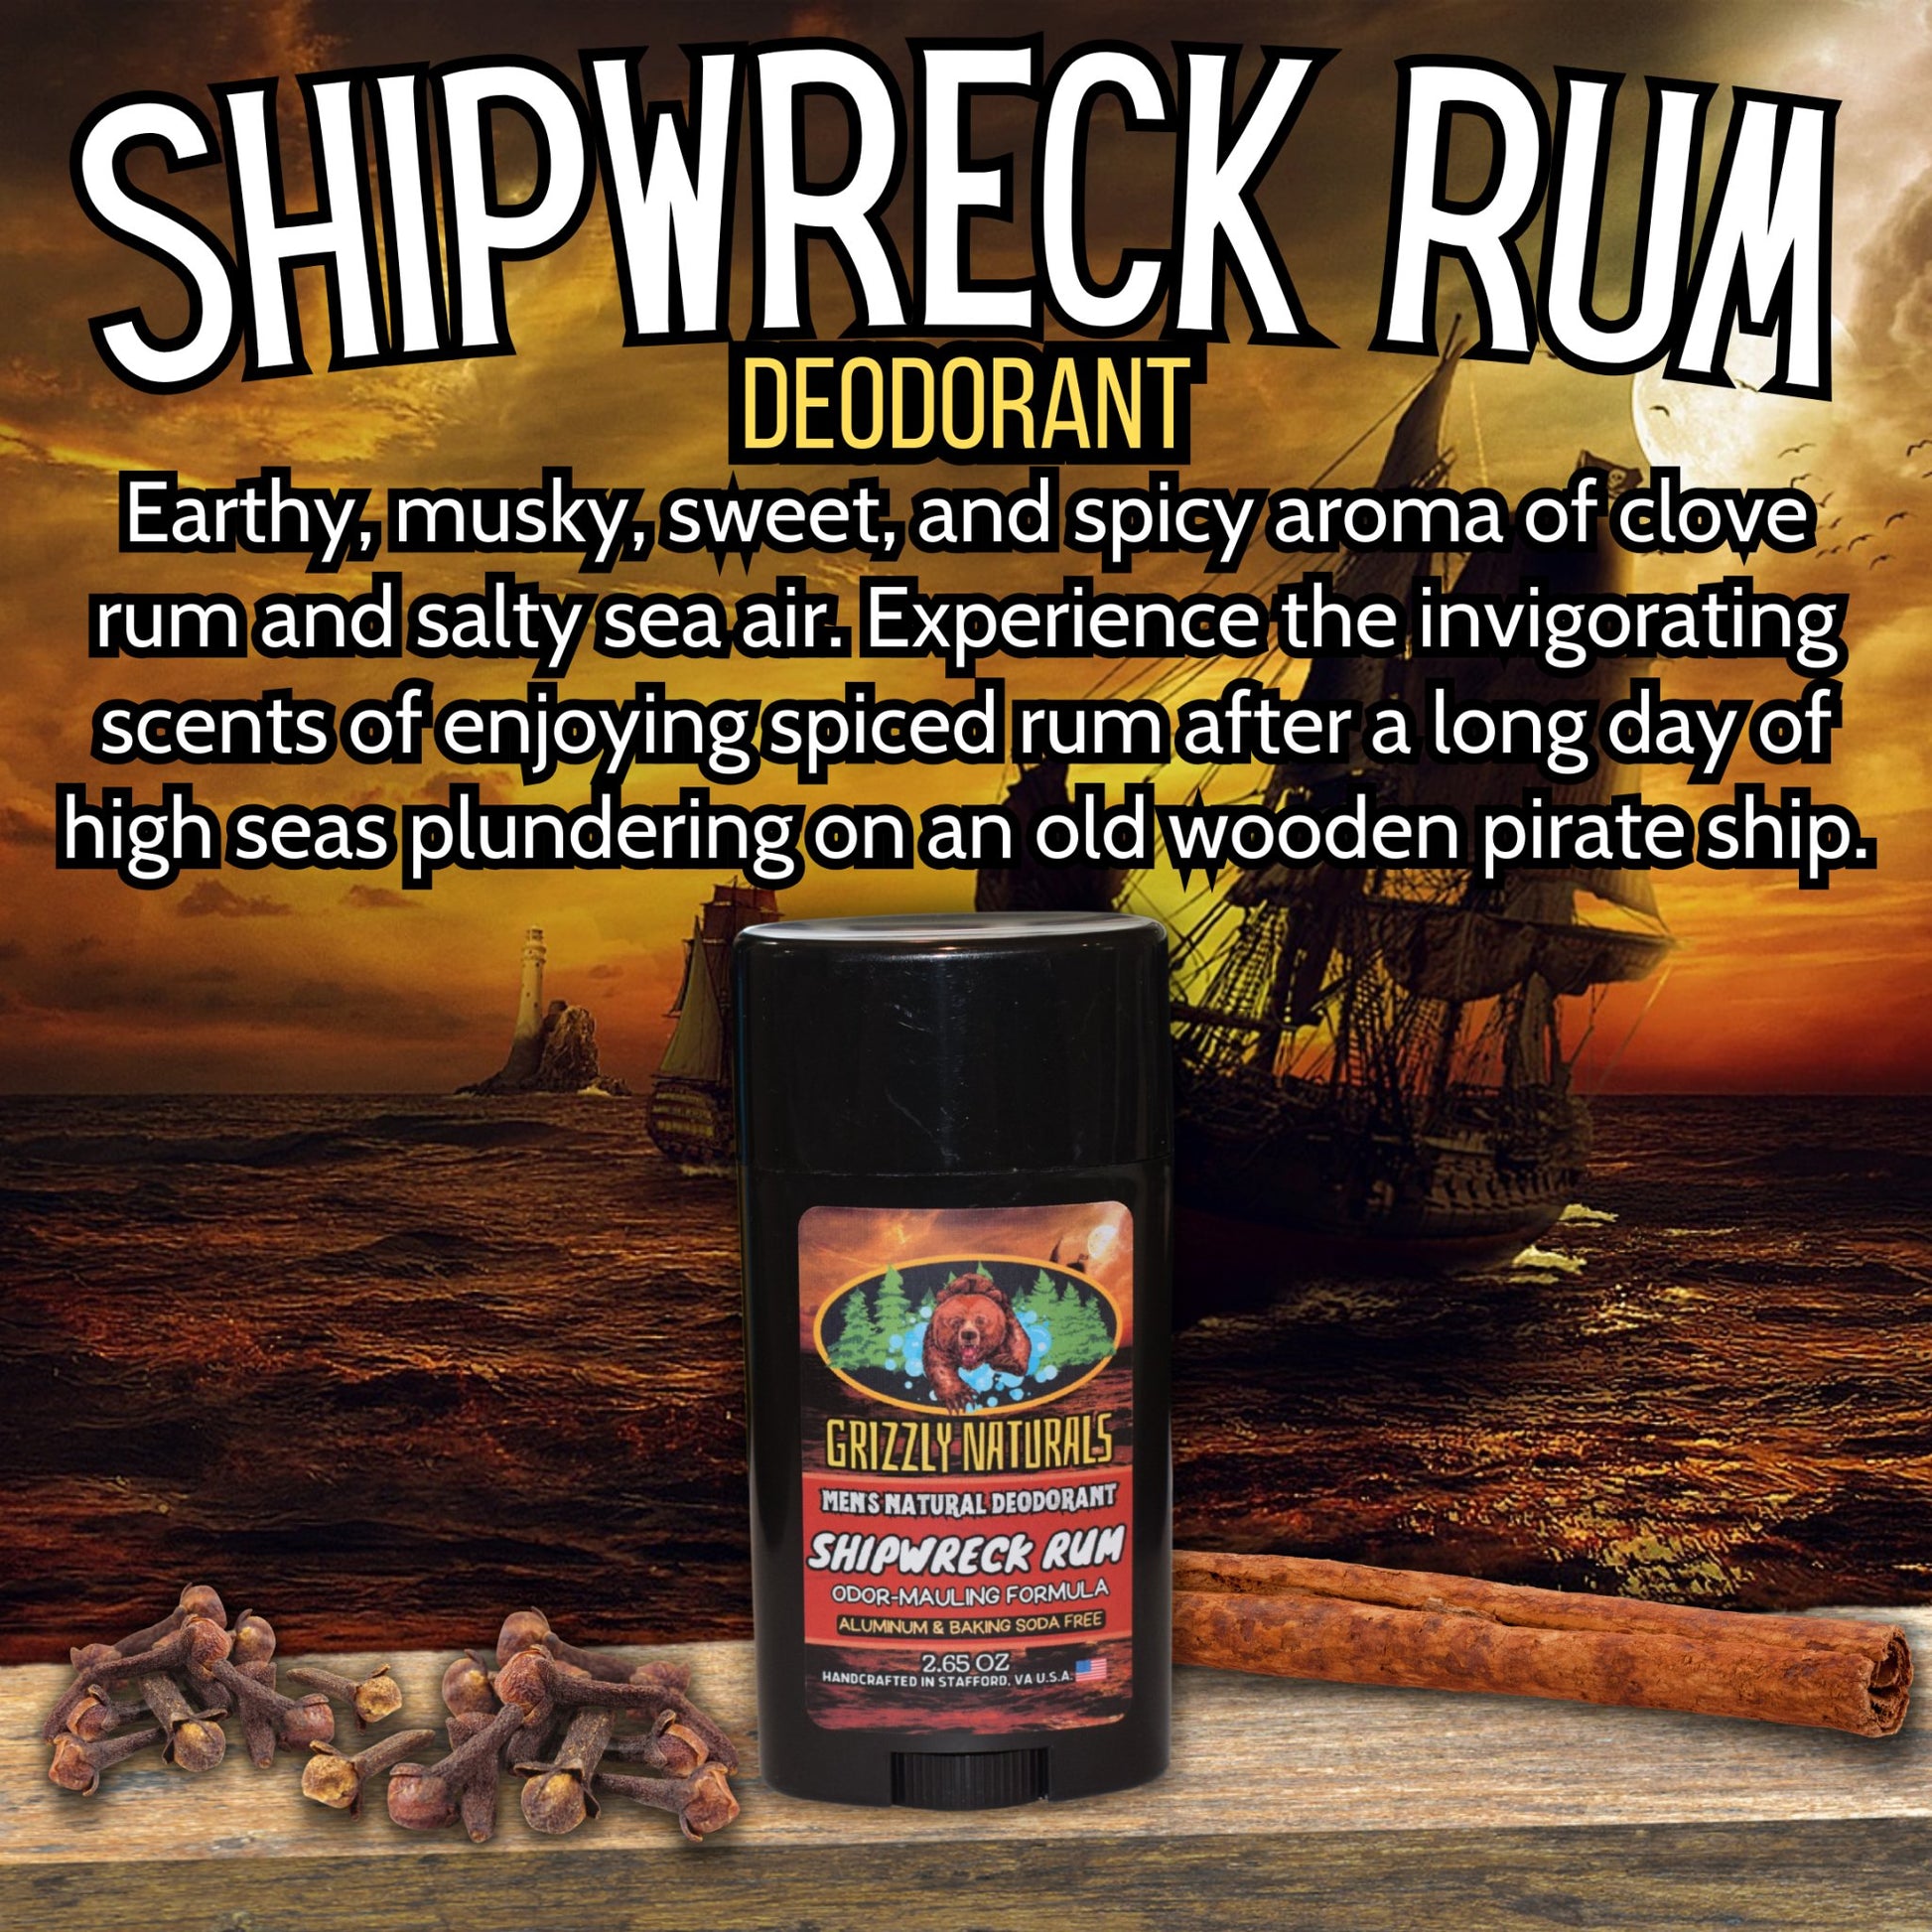 Shipwreck Rum - DEODORANT - Baking Soda & Aluminum Free - Grizzly Naturals Soap Company